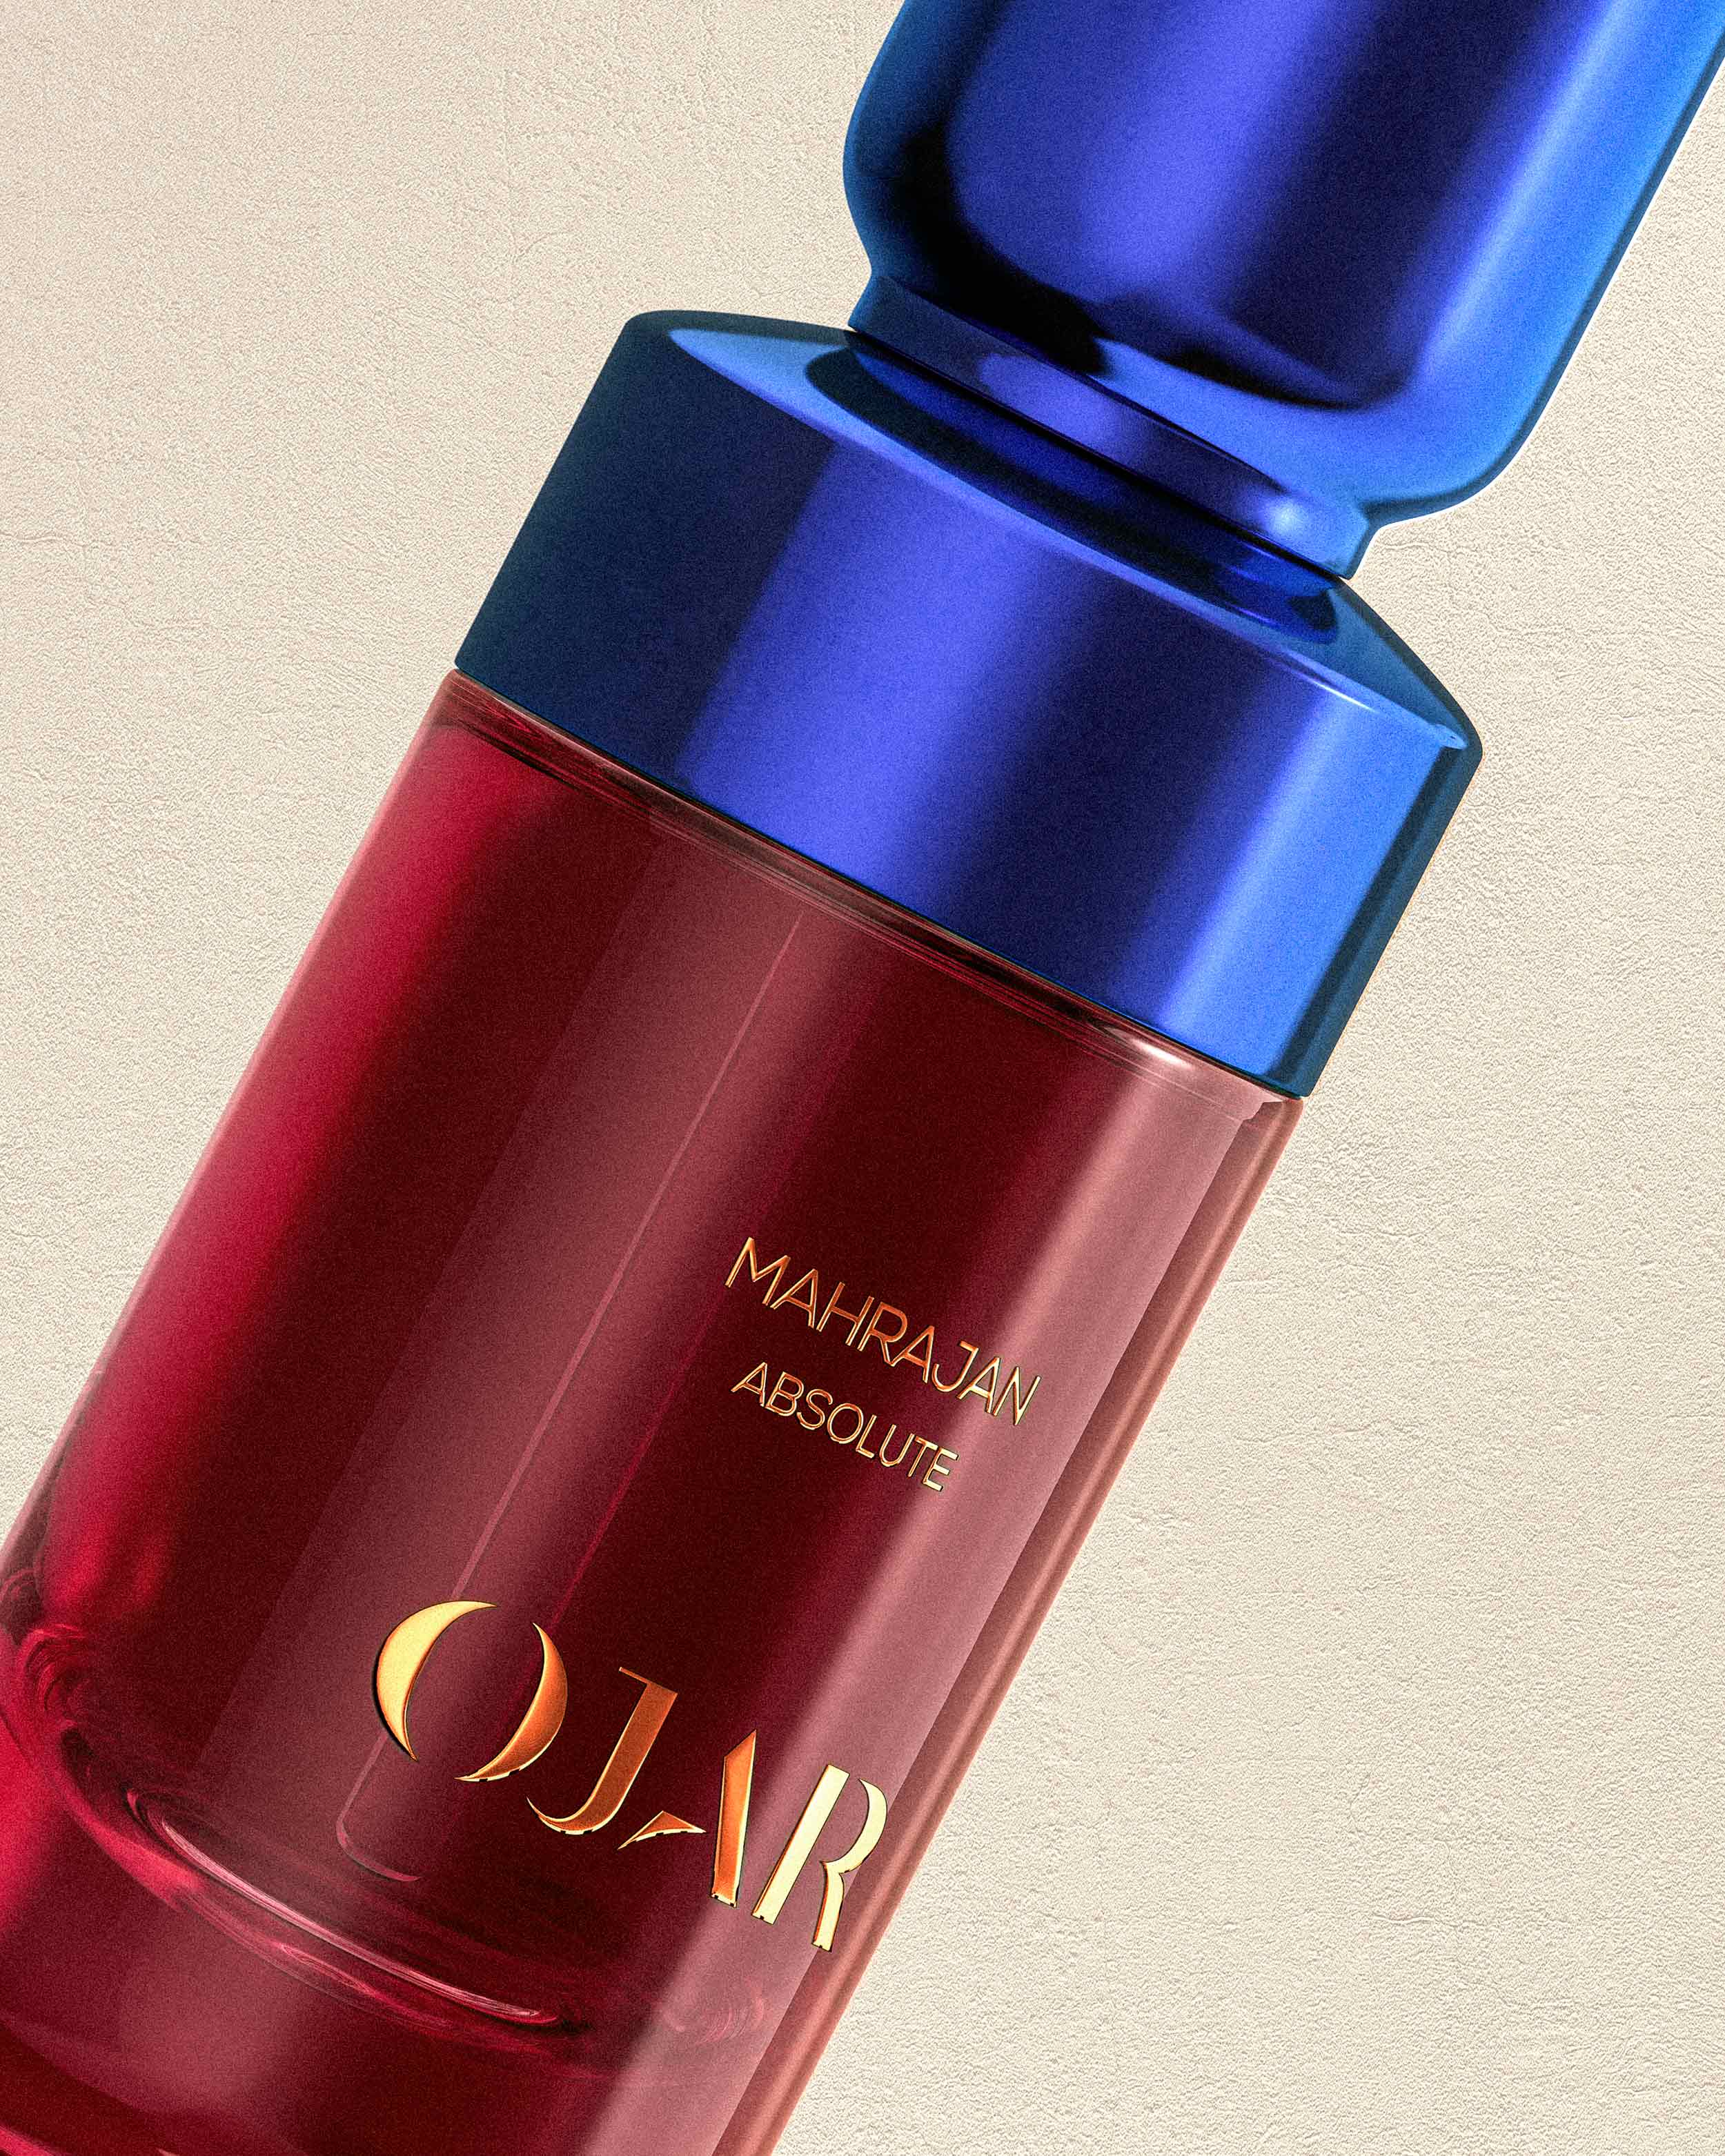 OJAR Absolute Mahrajan Perfume Close Up